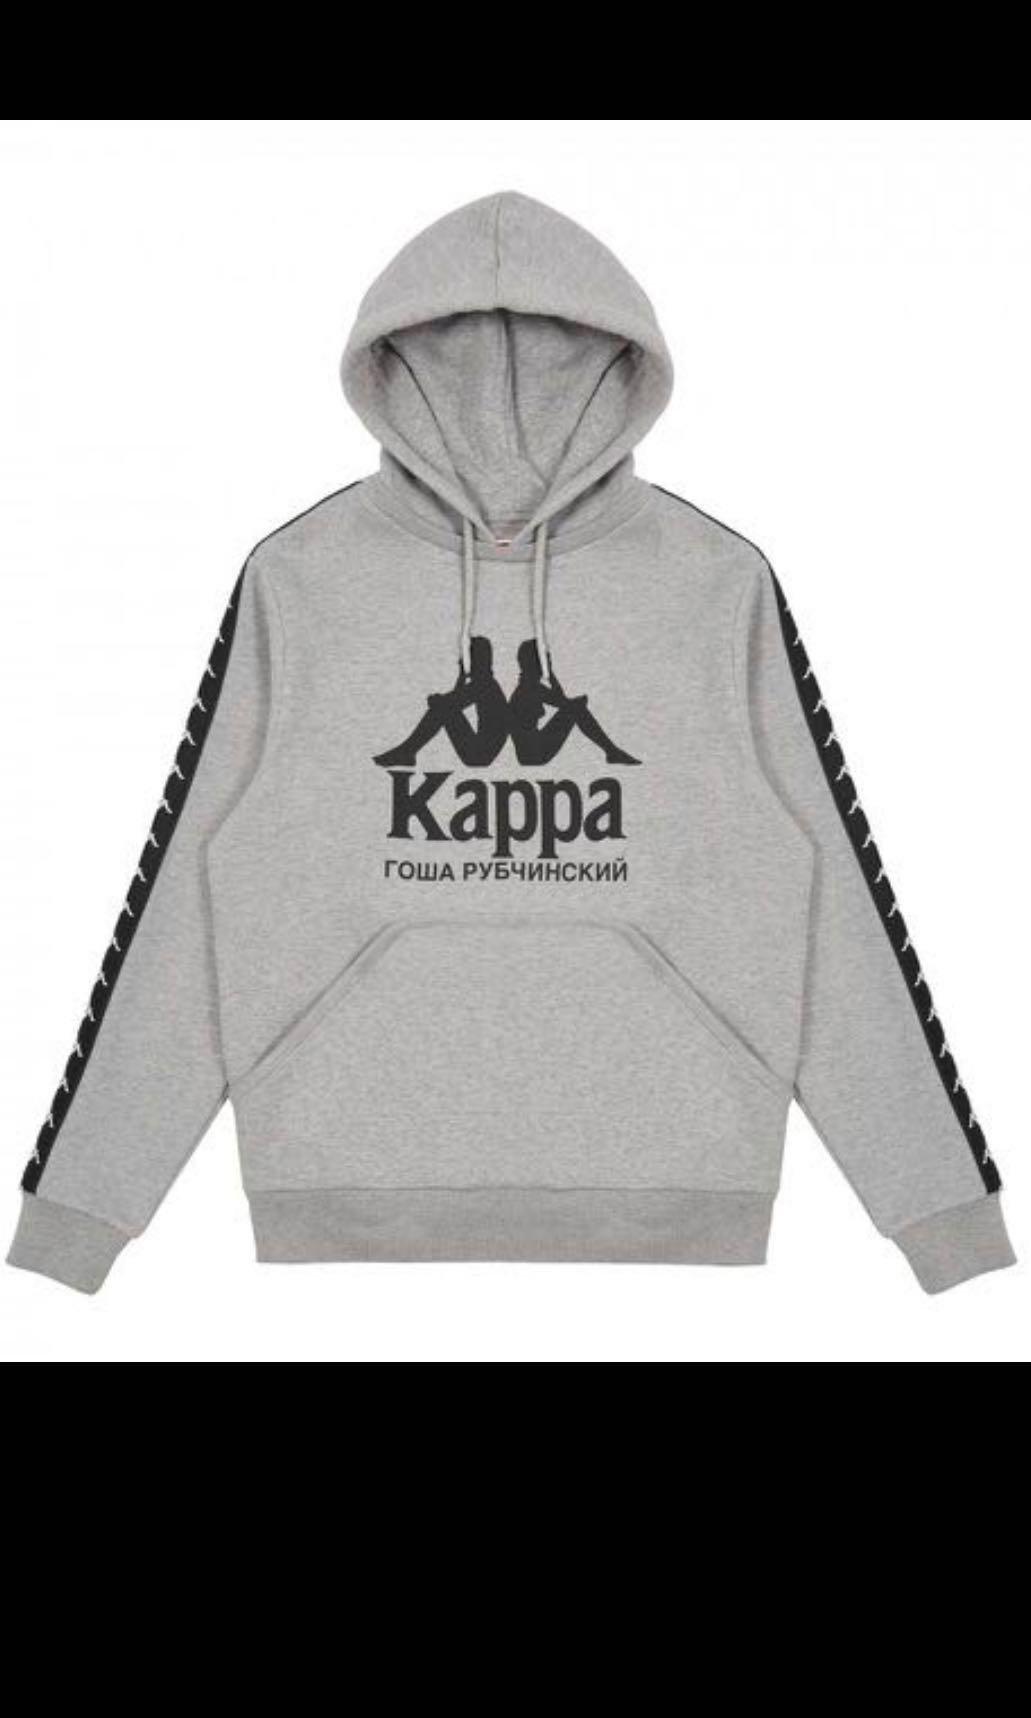 Kappa X Gosha Online Sale, UP OFF